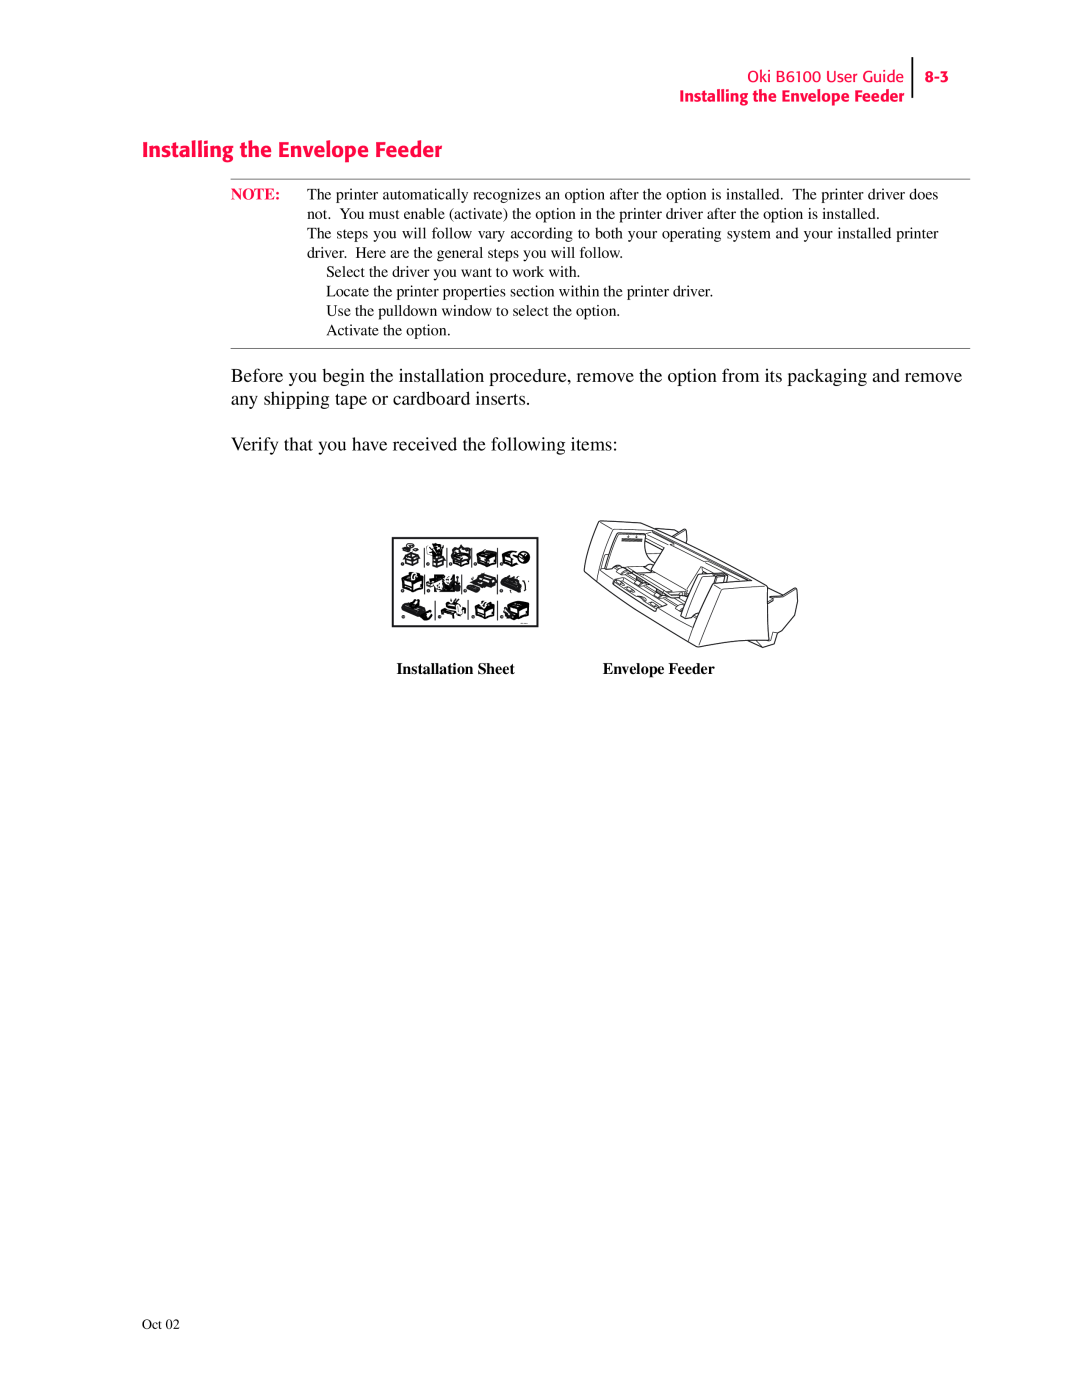 Oki manual Oki B6100 User Guide Installing the Envelope Feeder, Installation Sheet 